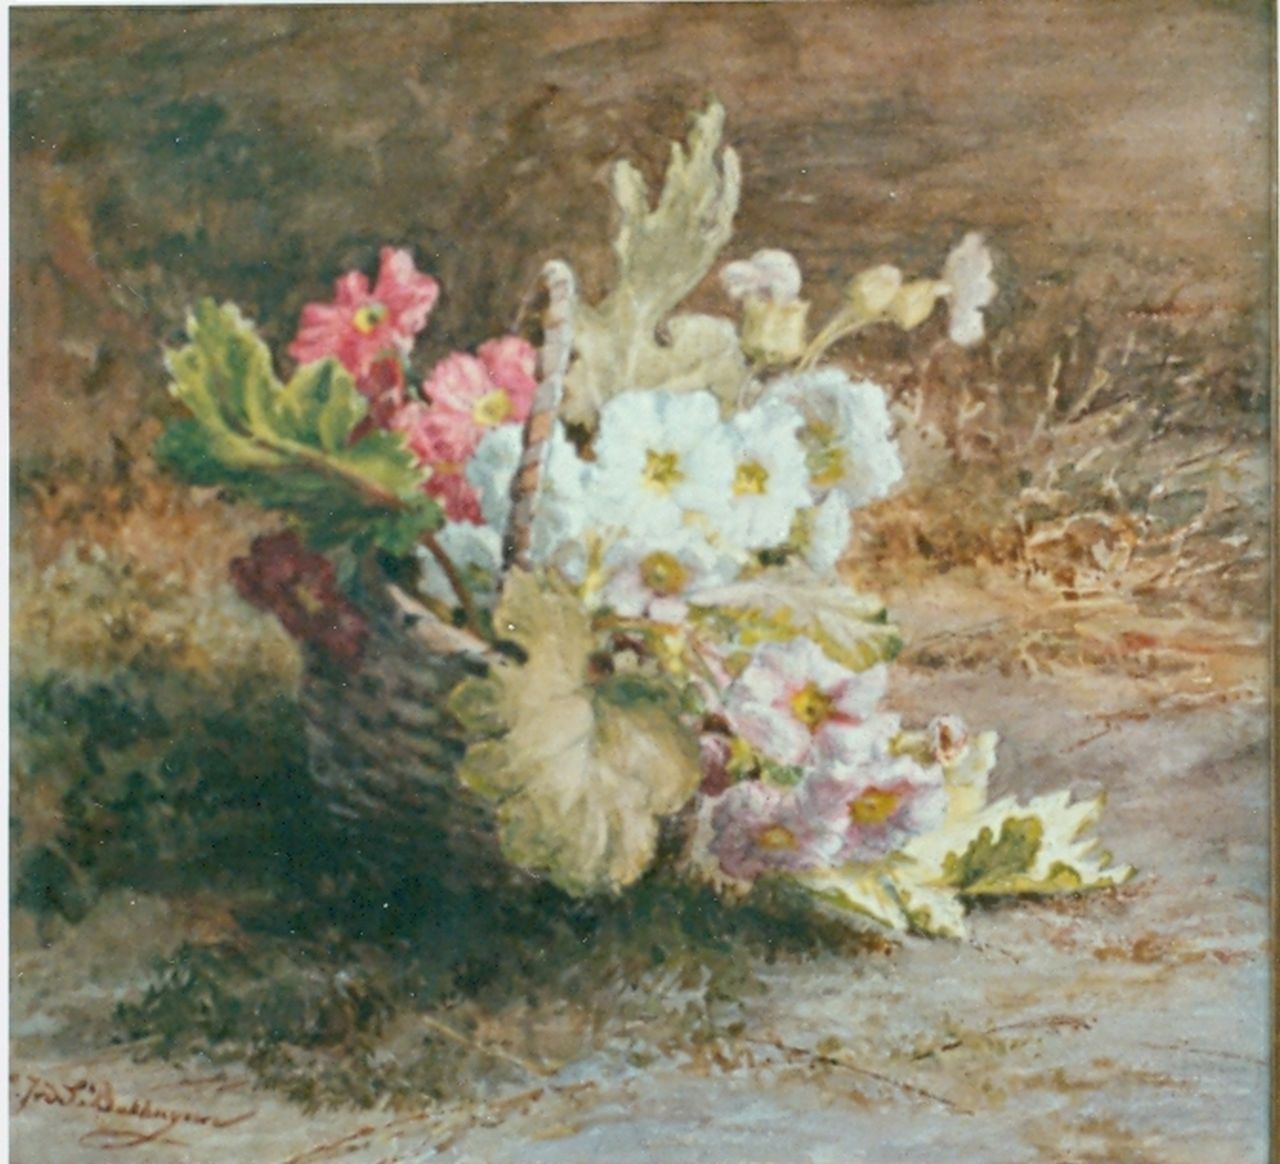 Sande Bakhuyzen G.J. van de | 'Gerardine' Jacoba van de Sande Bakhuyzen, Flowers in a basket, watercolour on paper 44.5 x 37.3 cm, signed l.l.